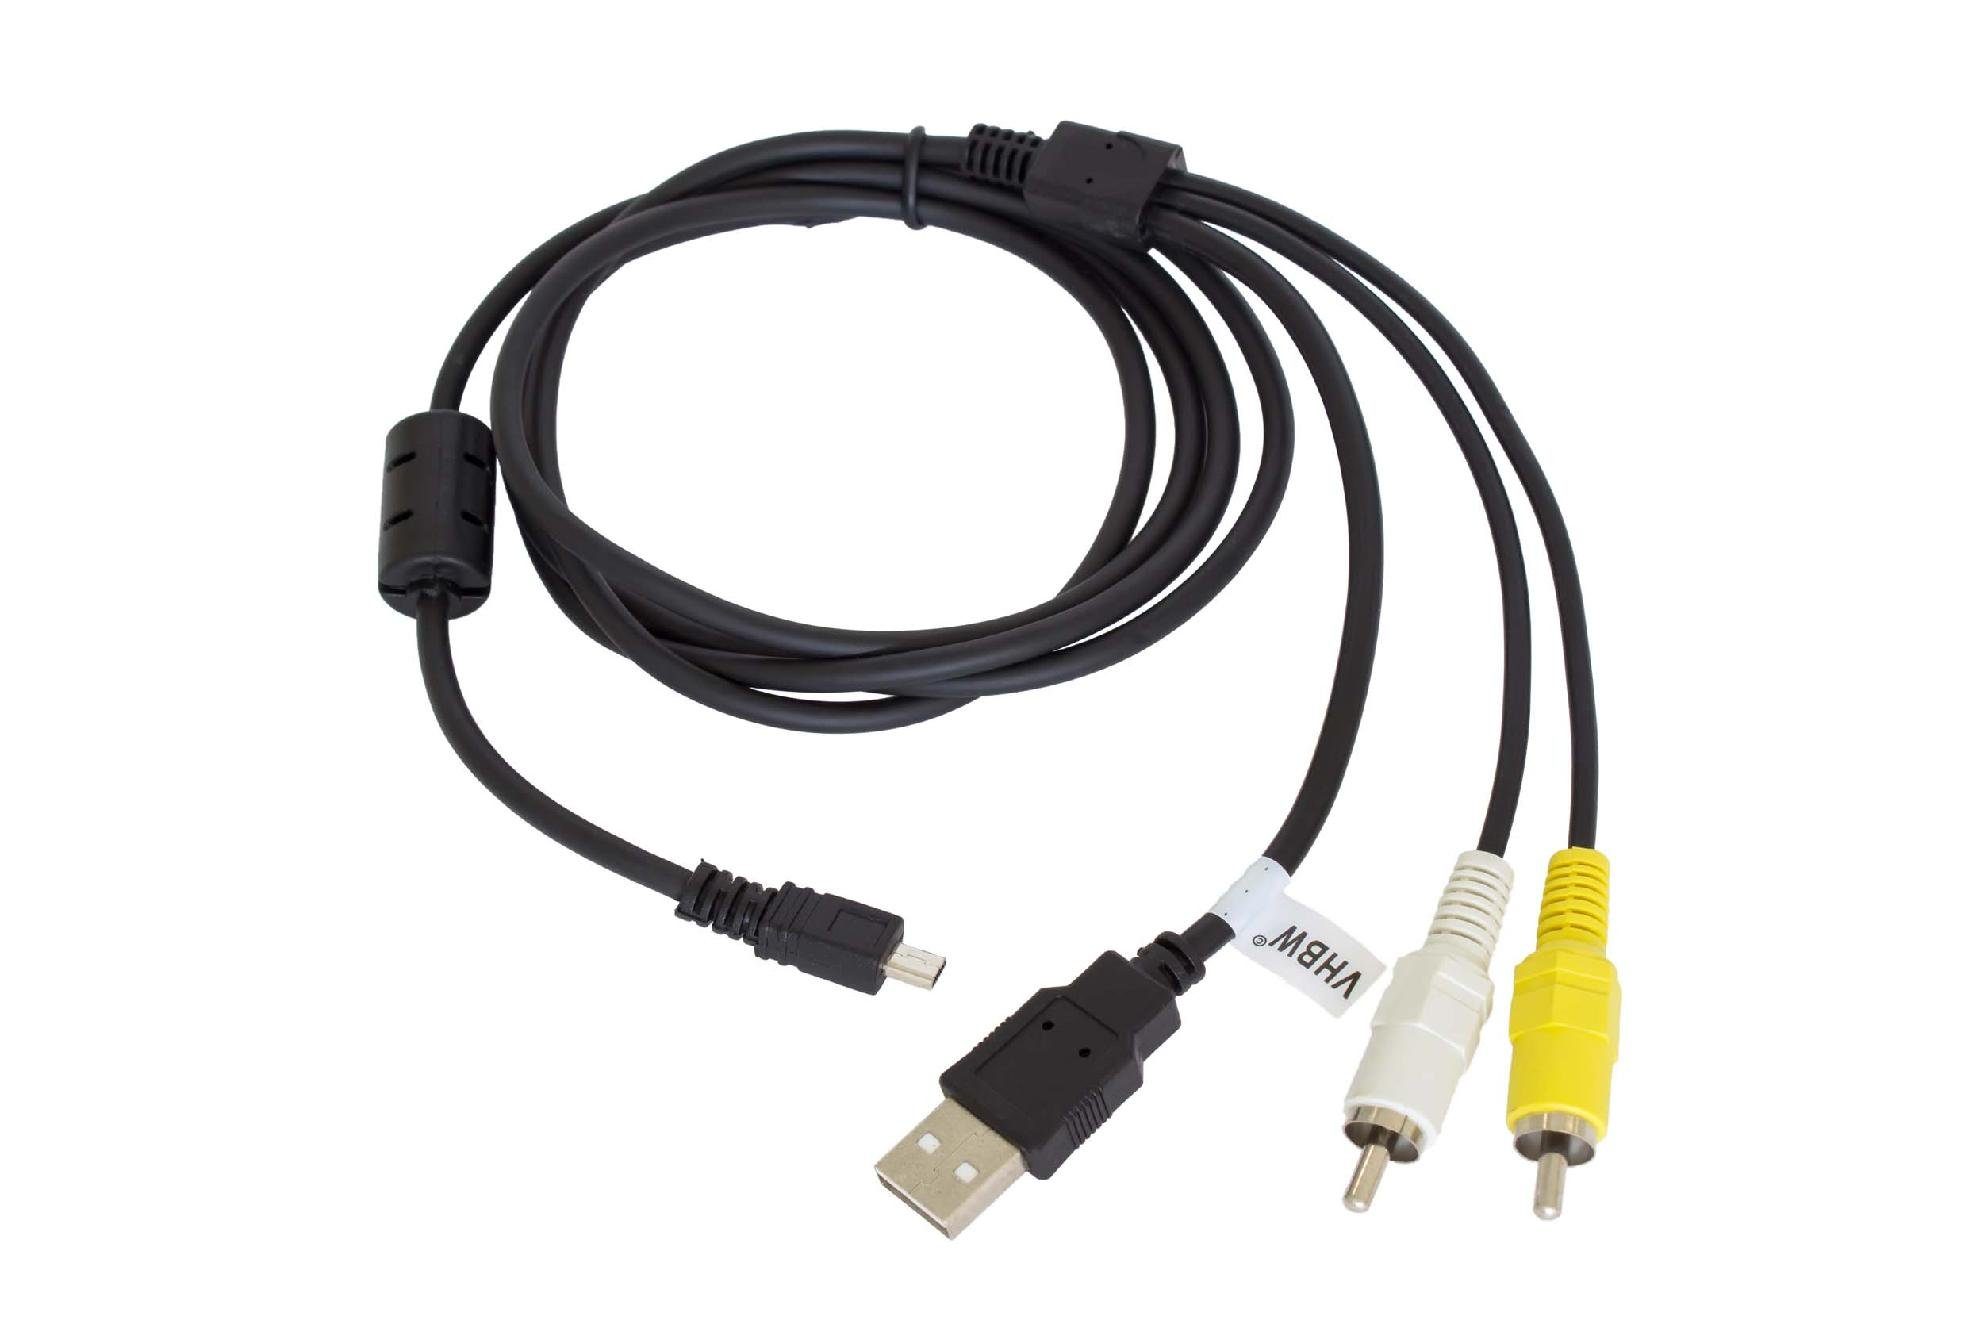 AV TV Video Kabel für Sony Cybershot DSC-H200Länge 1,8mA/V Cinch 